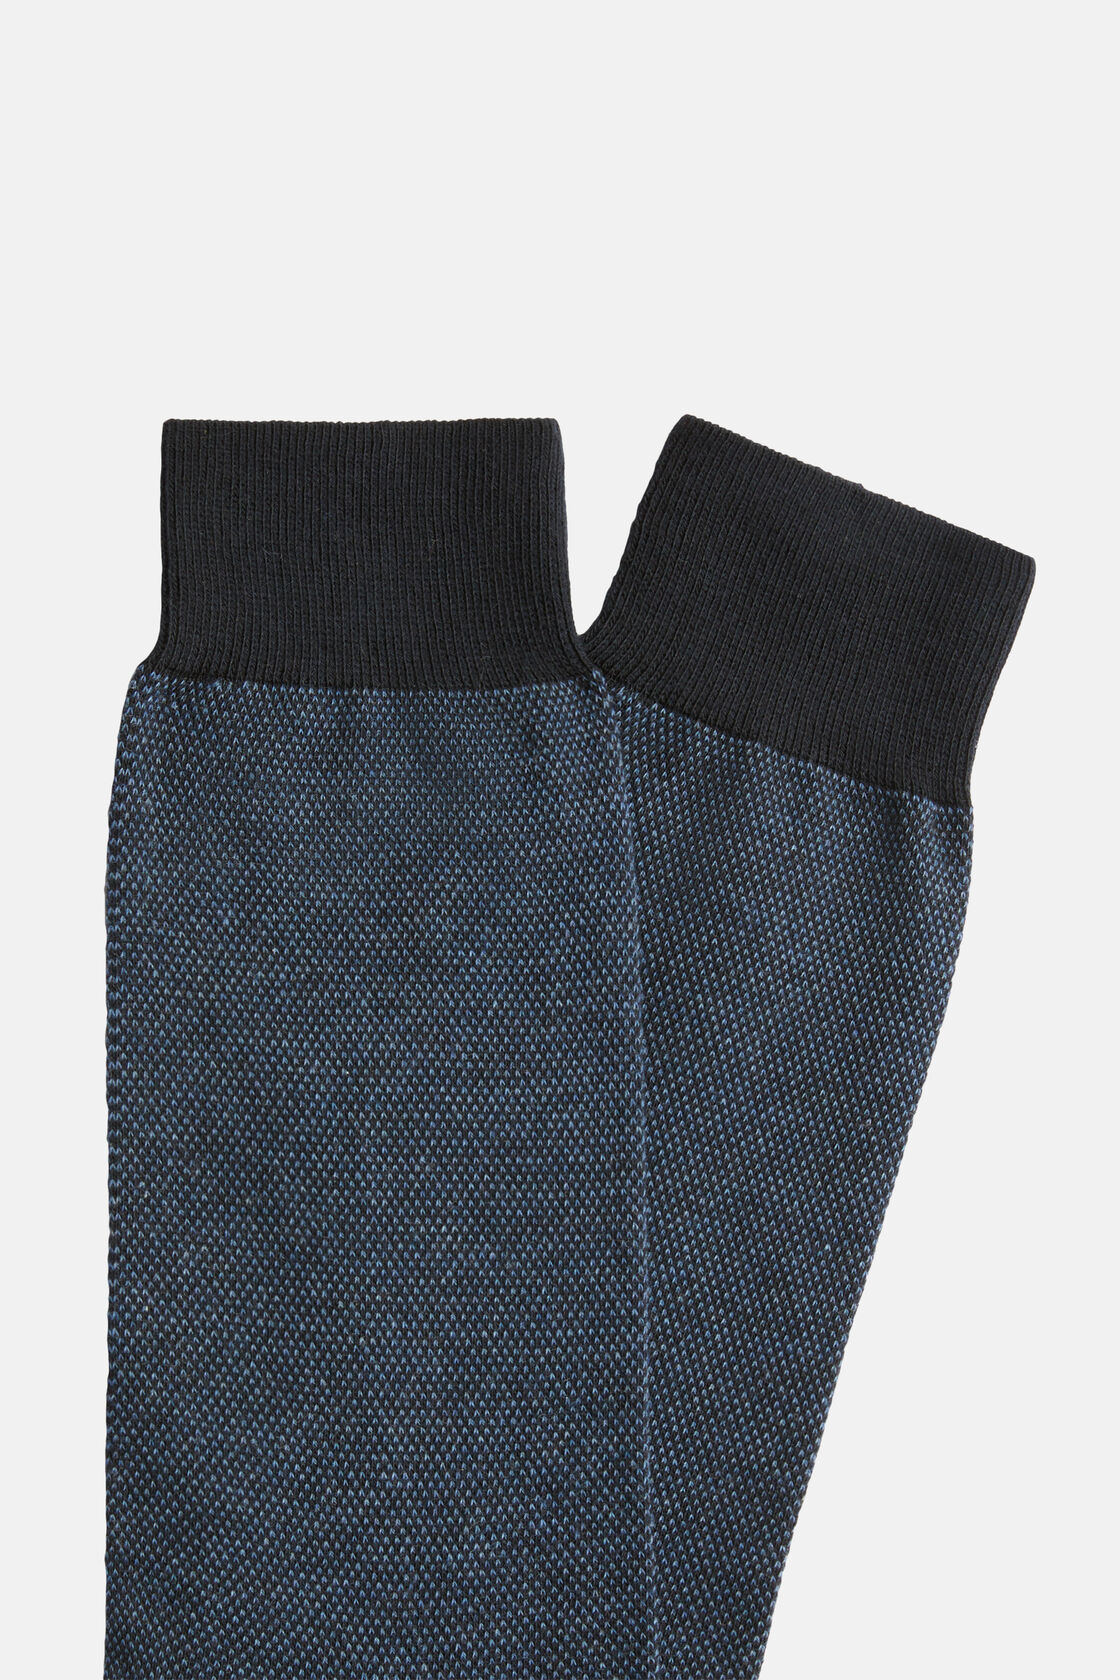 Organic Cotton Oxford Socks, Navy blue, hi-res